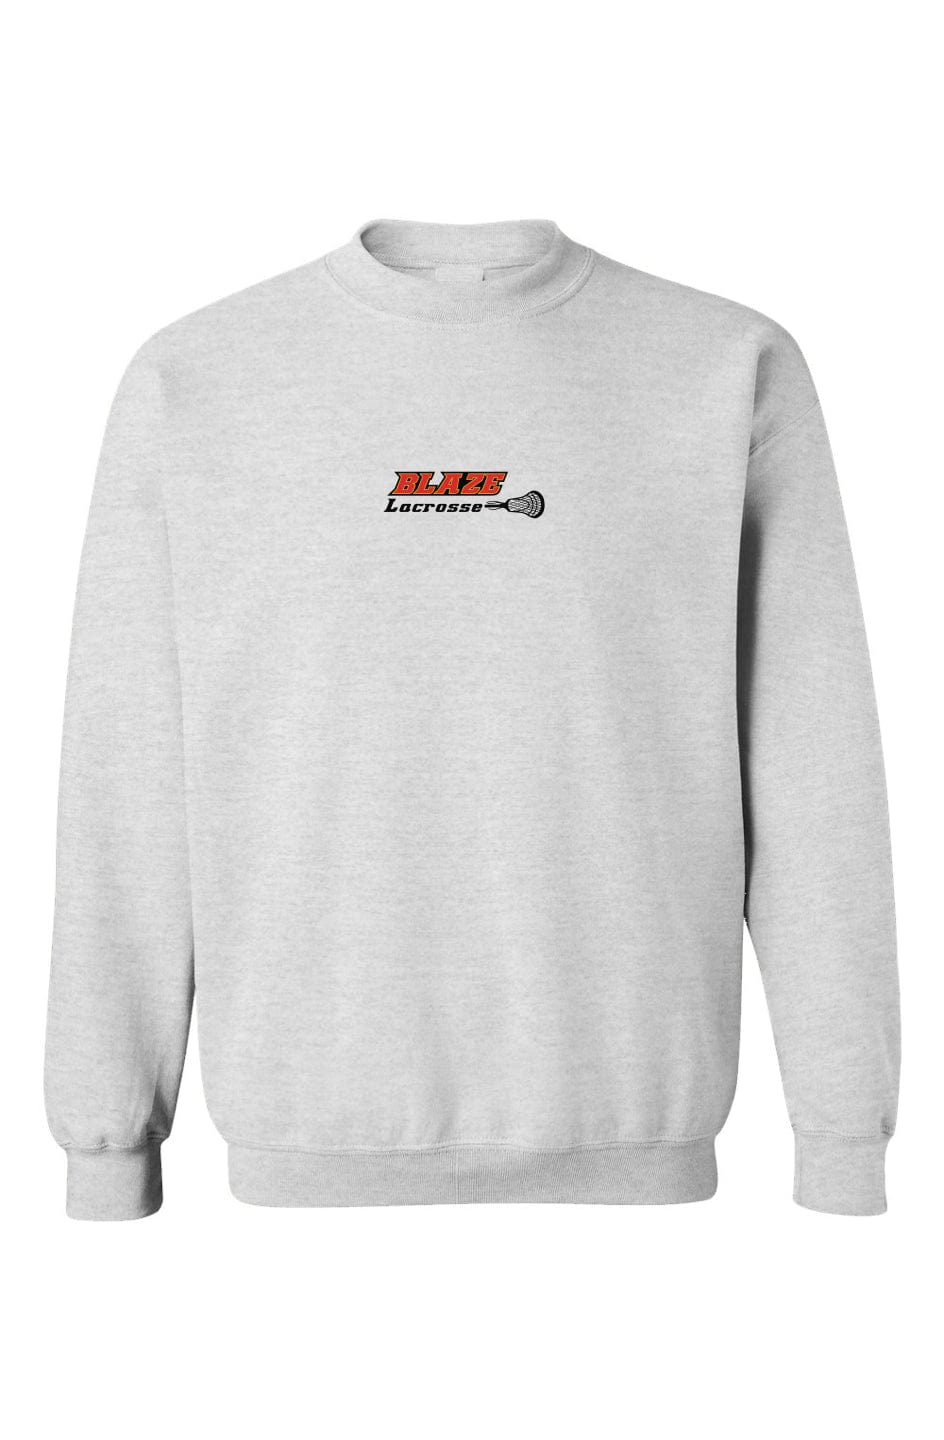 Haverford Blaze LC Premium Youth Sweatshirt Signature Lacrosse